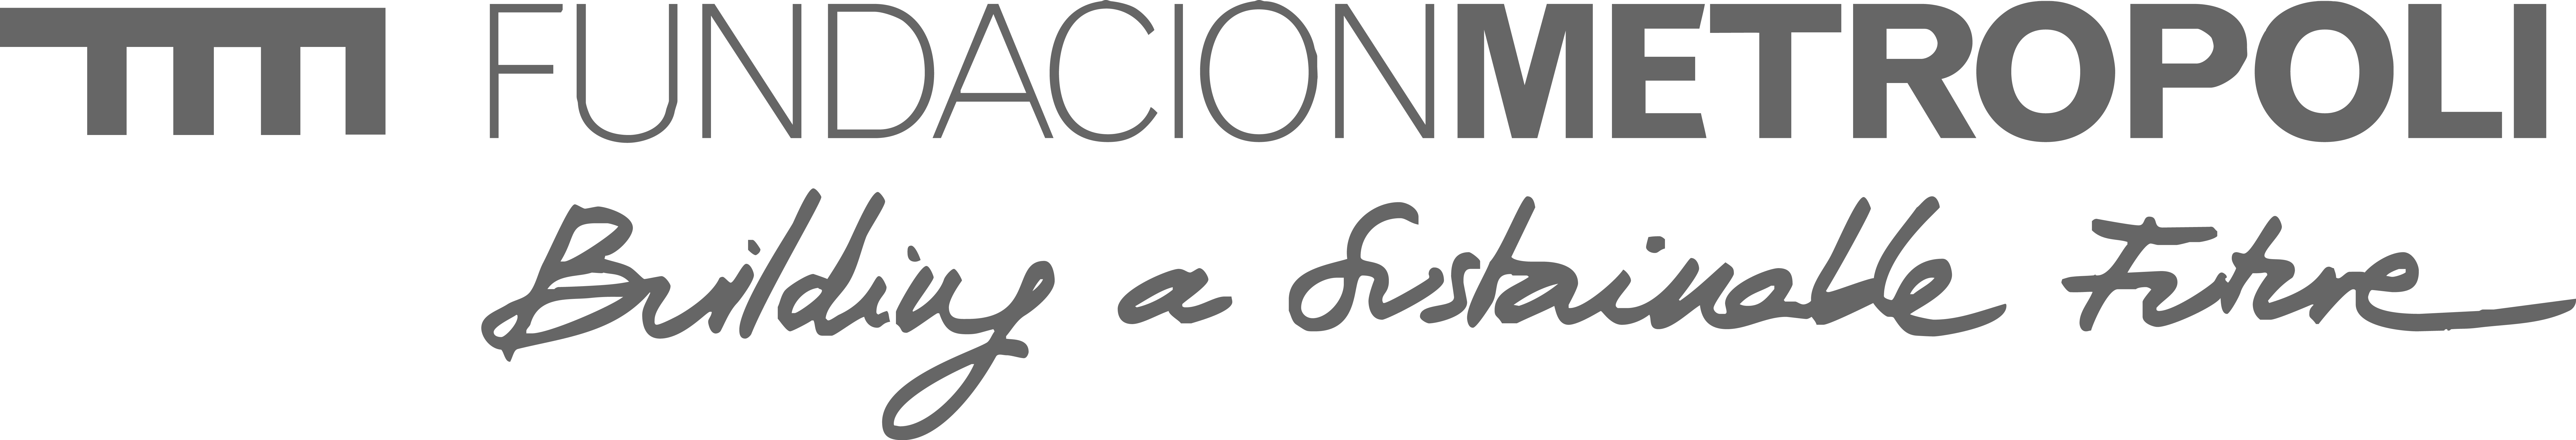 Logo FM_alta (002)